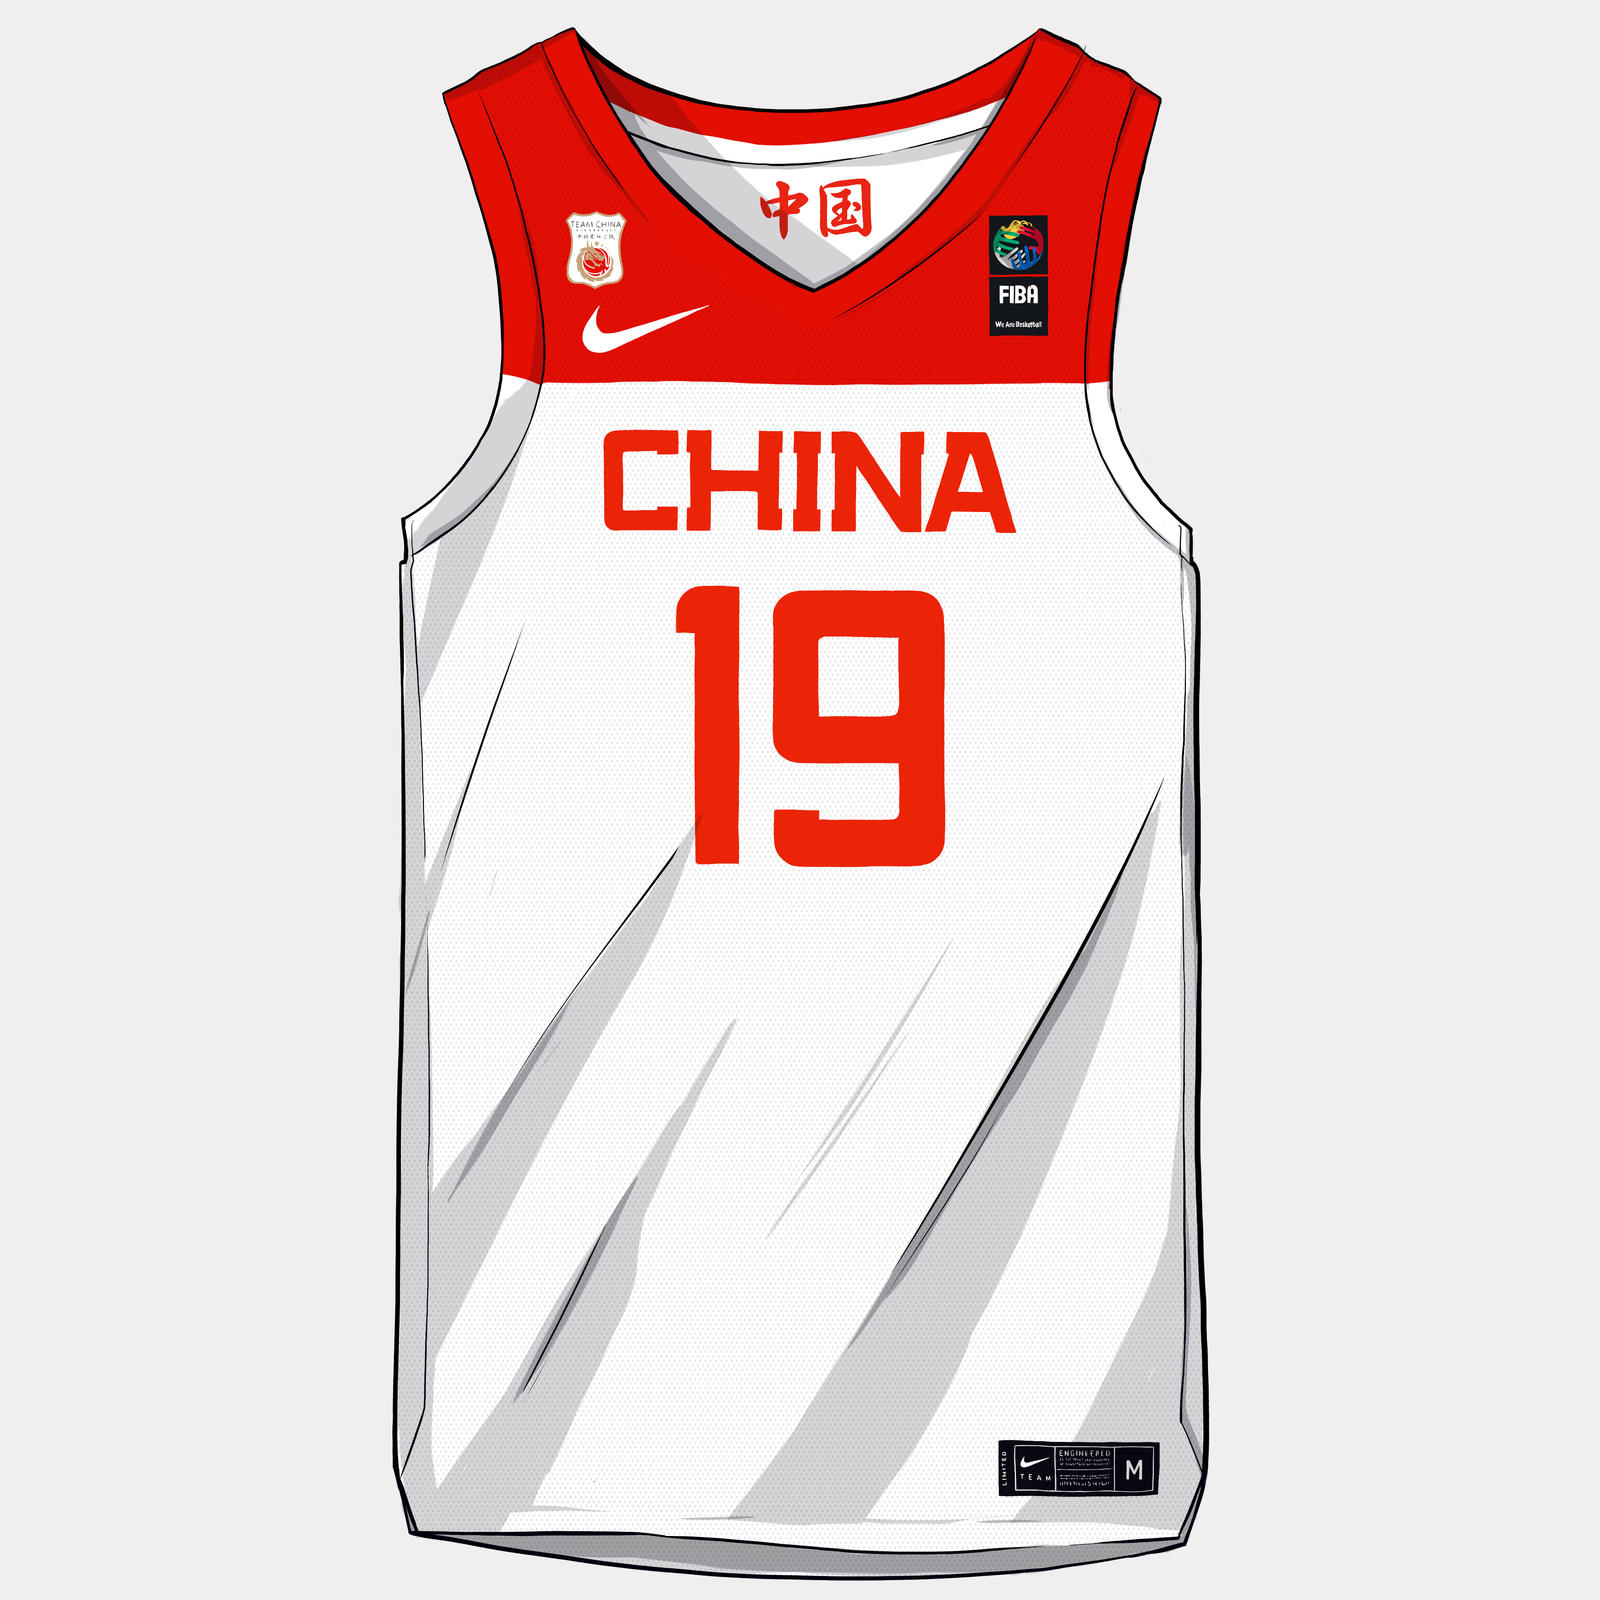 NikeNews_China19BasketballUniforms_chinawhite1x1v2_square_1600.jpg